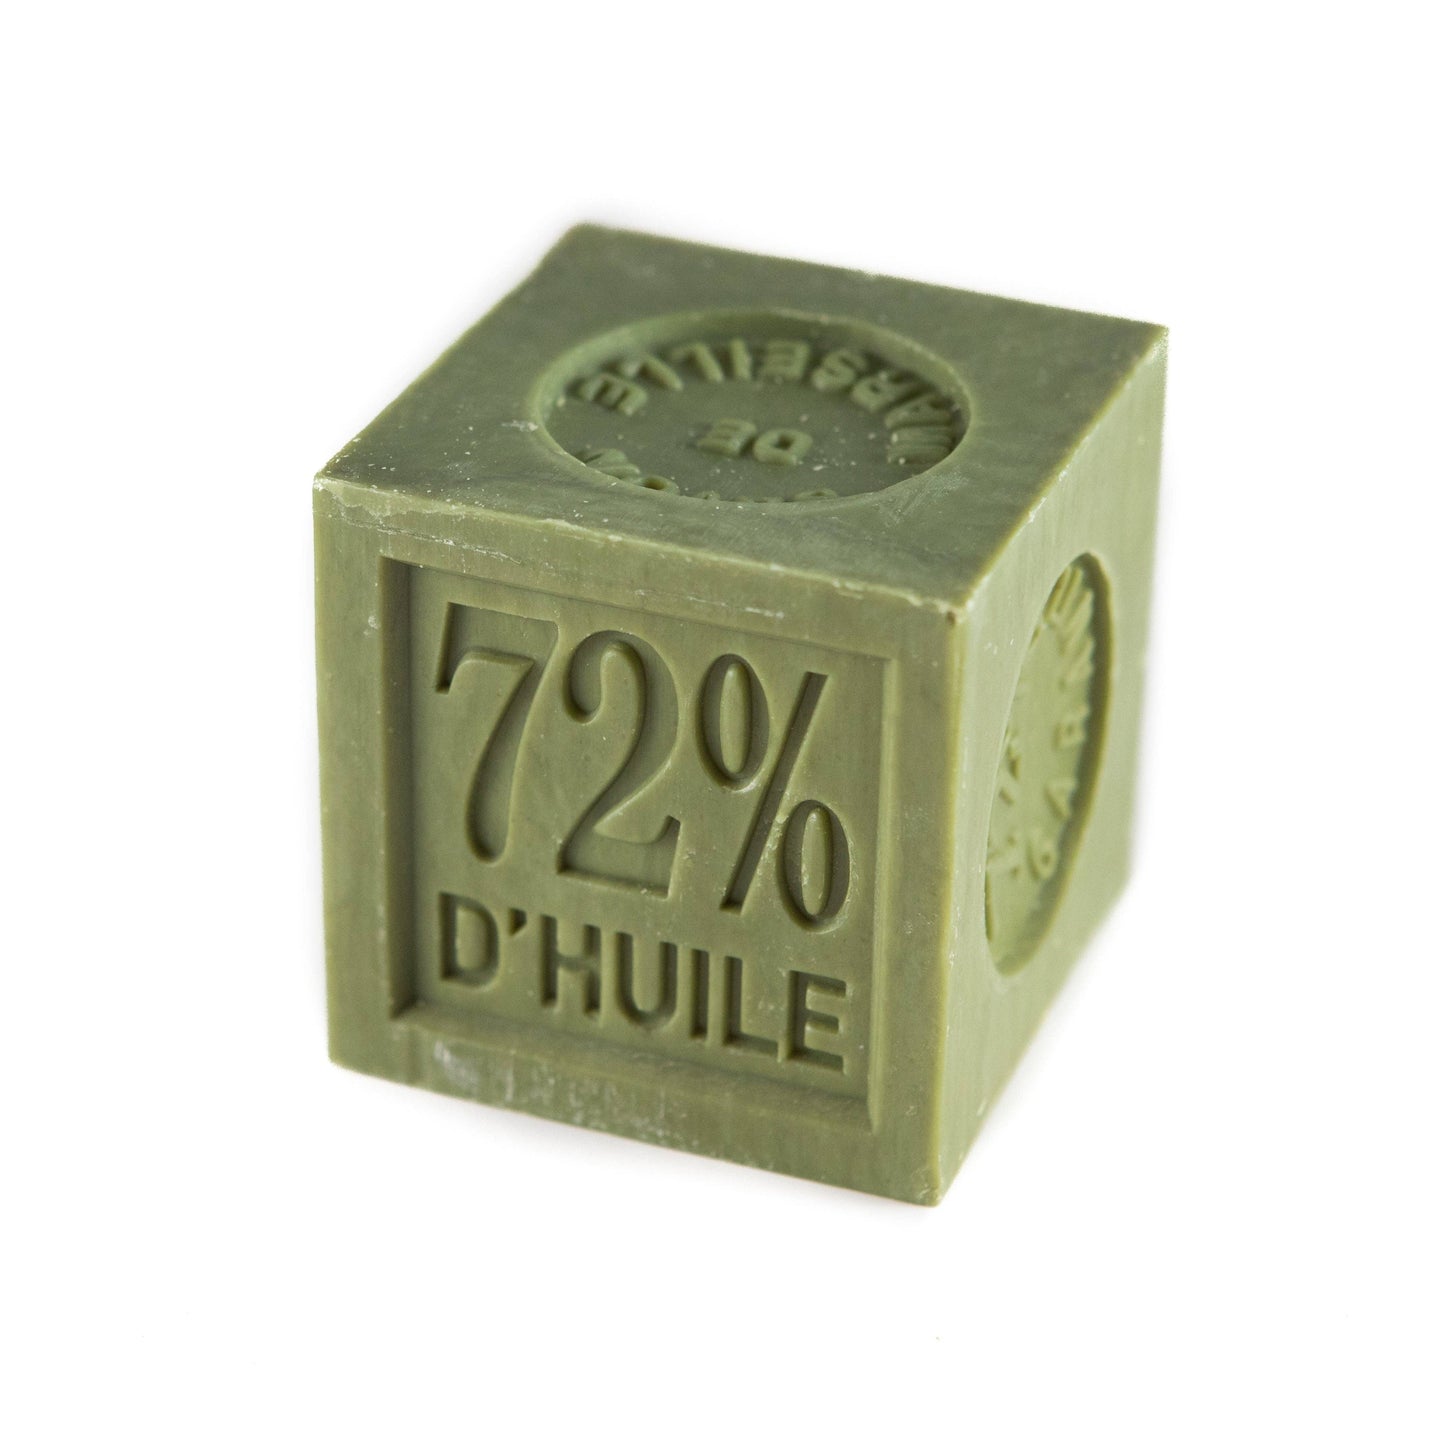 Marseille soap 72% - 300g cube